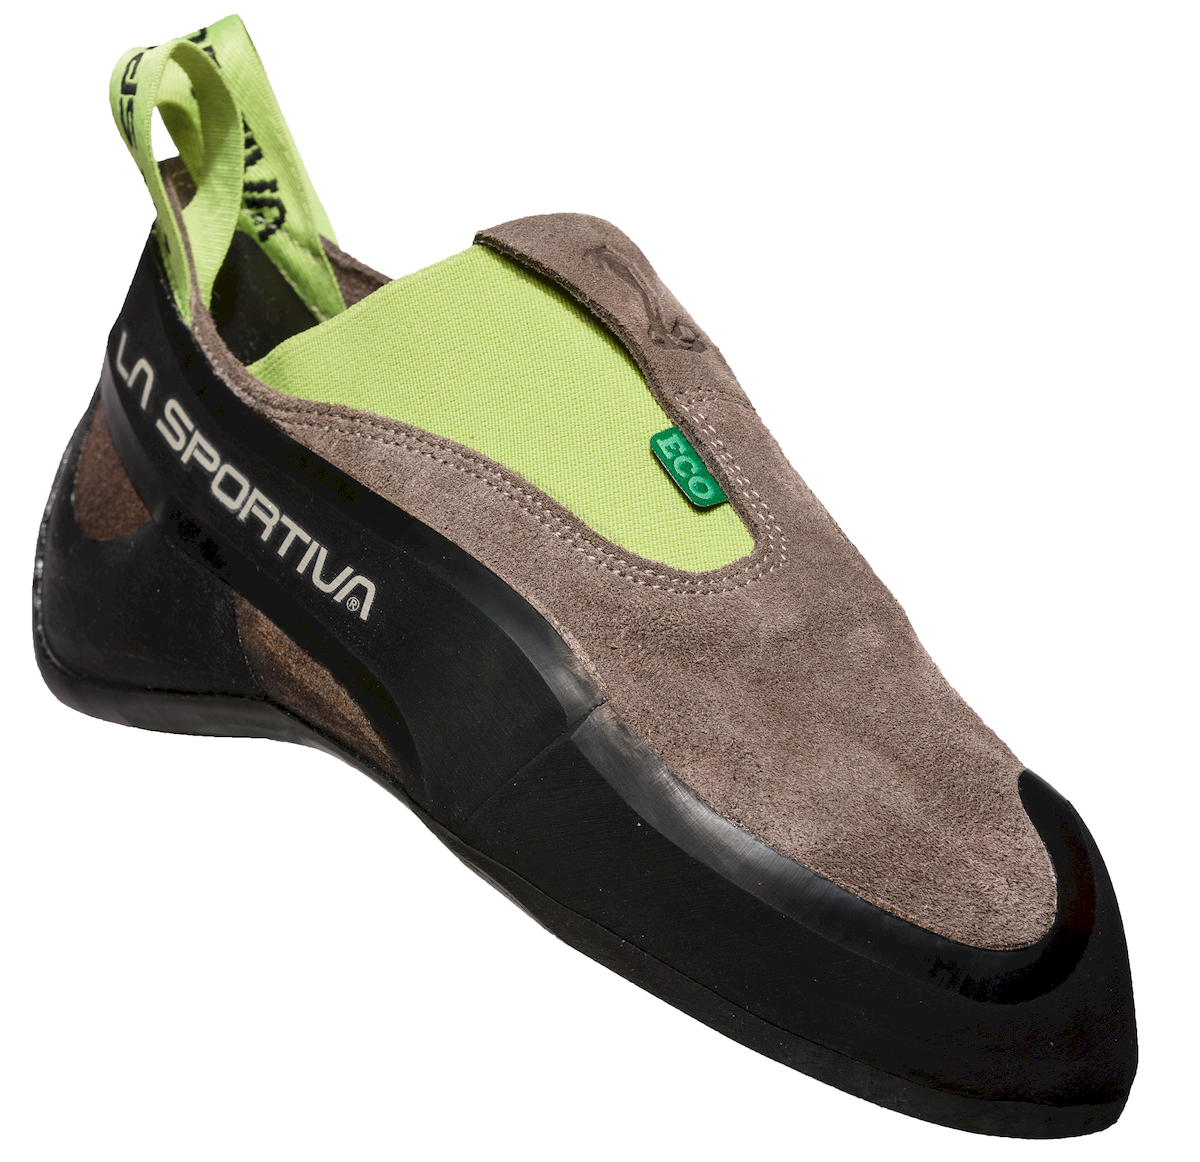 La Sportiva Cobra Eco - Climbing shoes